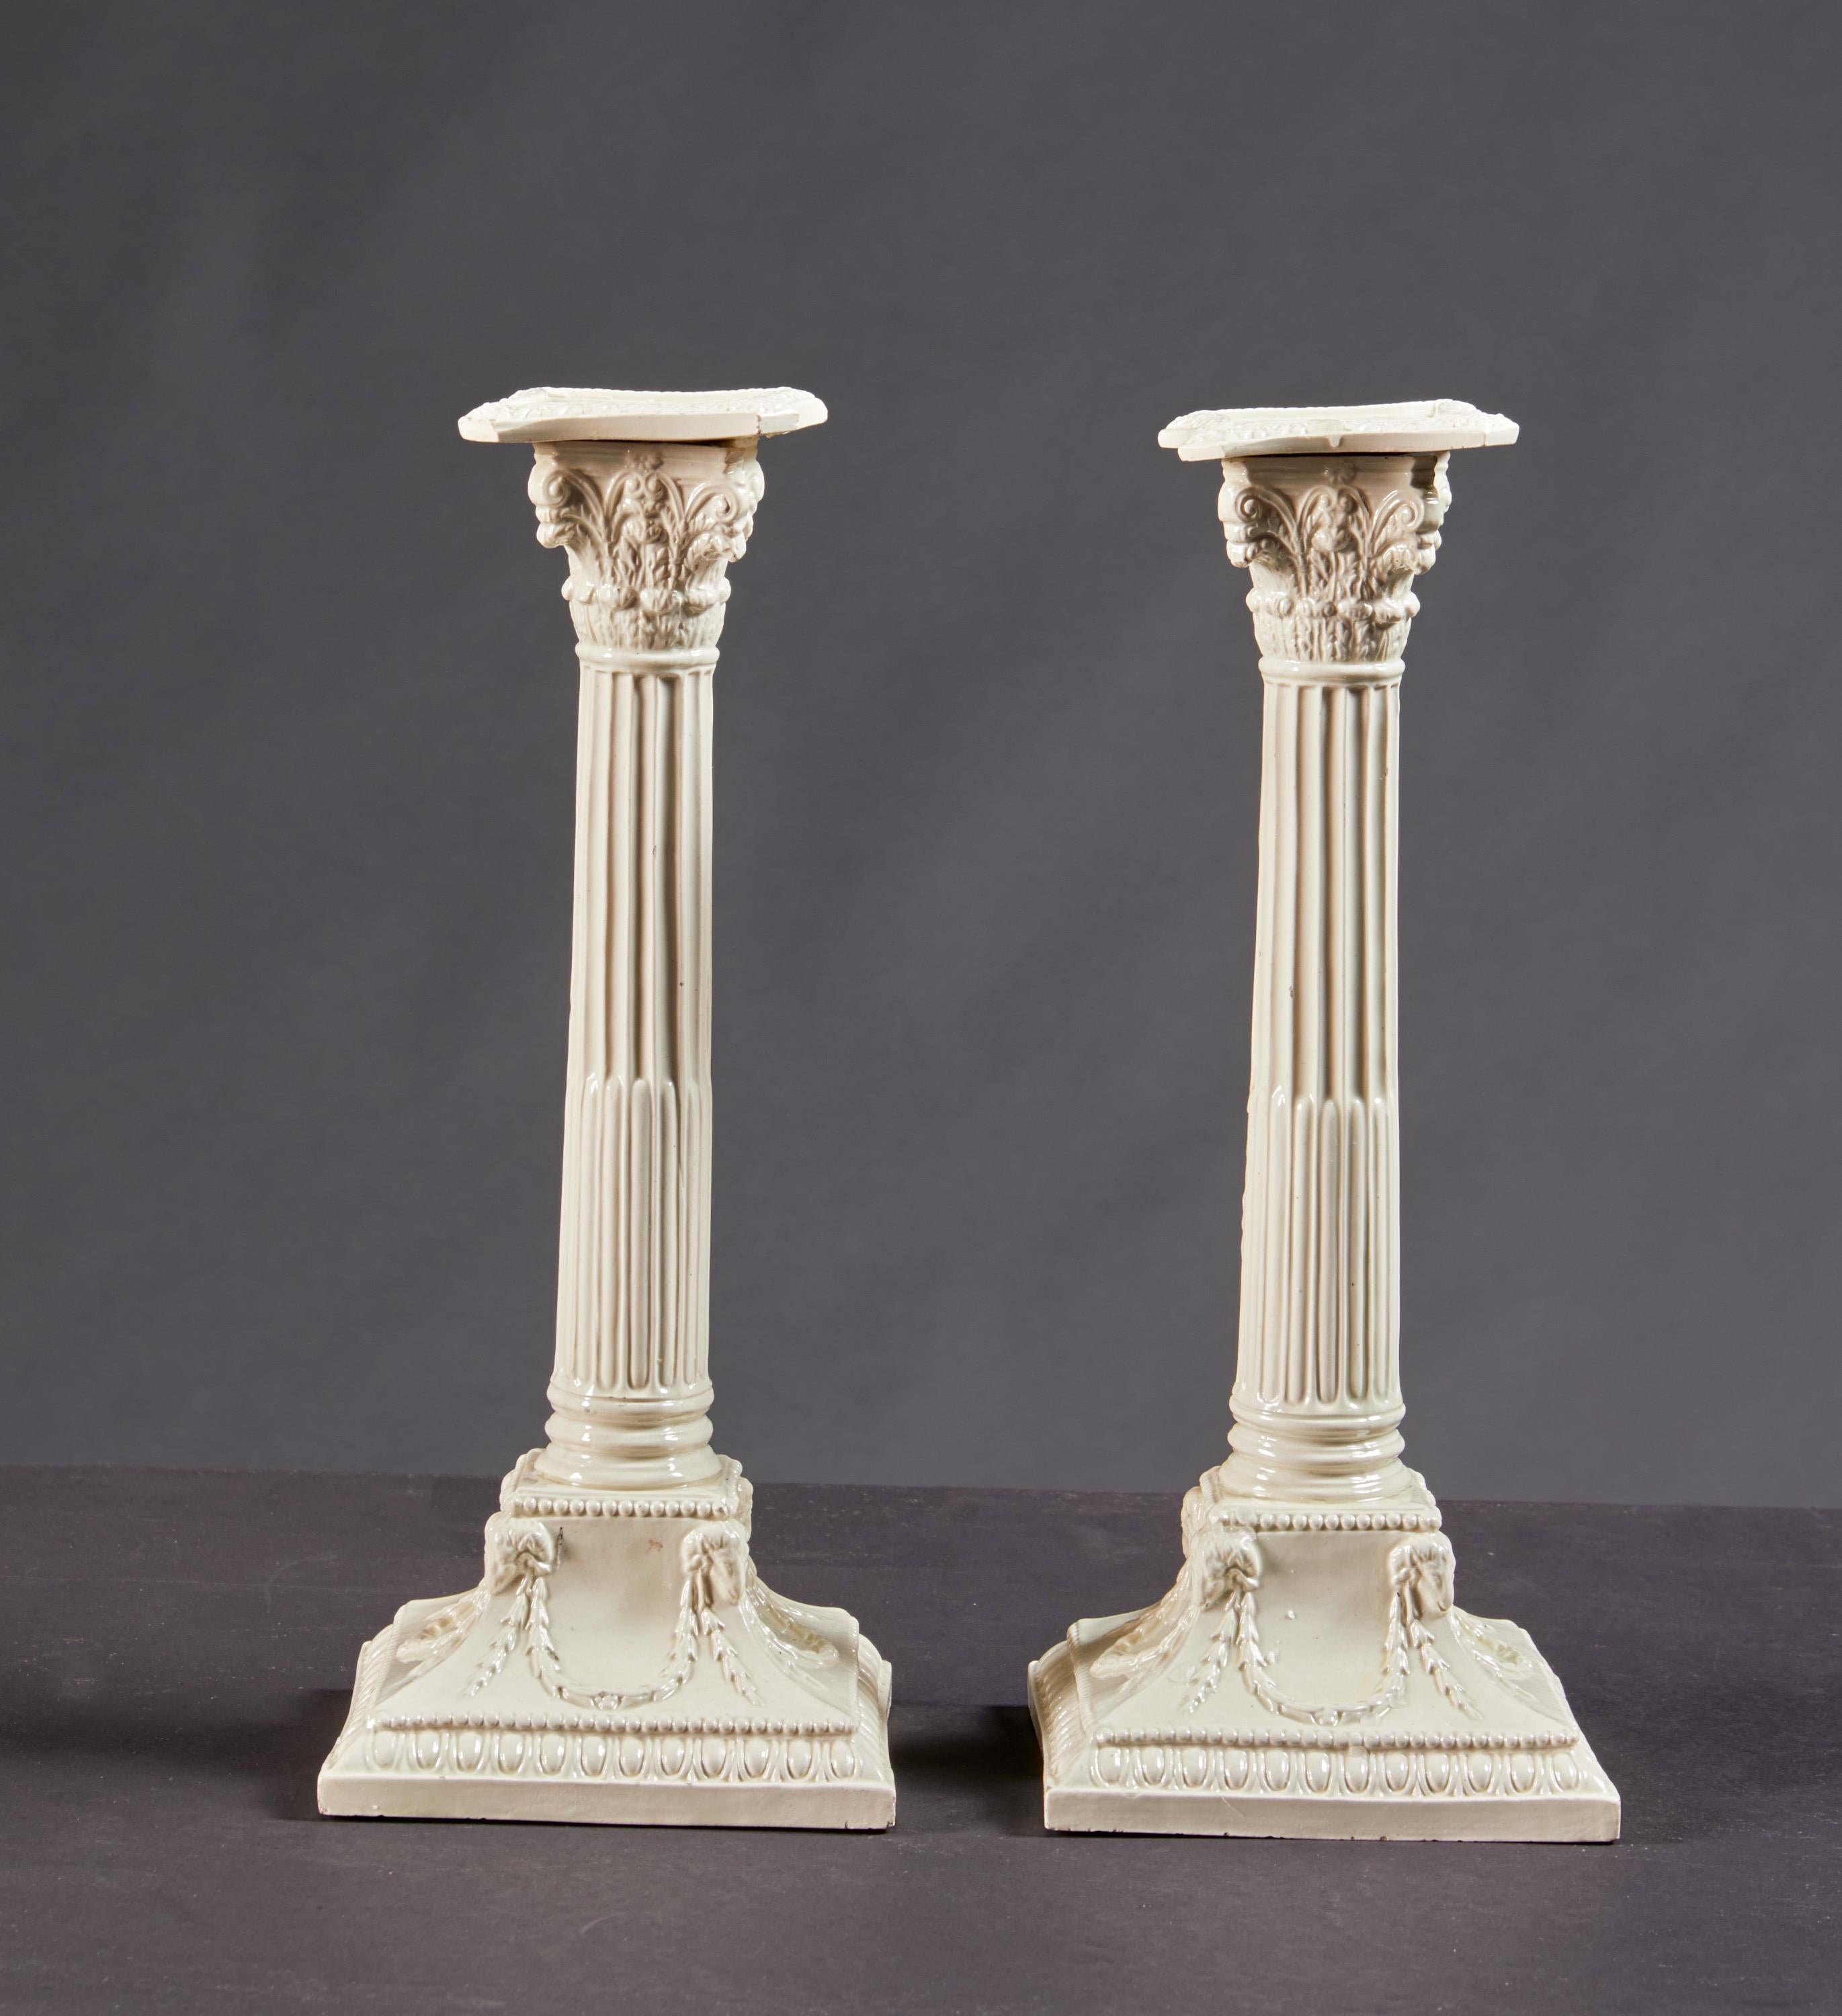 A pair of very fine creamware corinthian column, neo-classic period candlesticks with rams head garland decoration on square bases. English, circa 1770. Ex. Coll. Earle Vandekar of Knightsbridge, London.